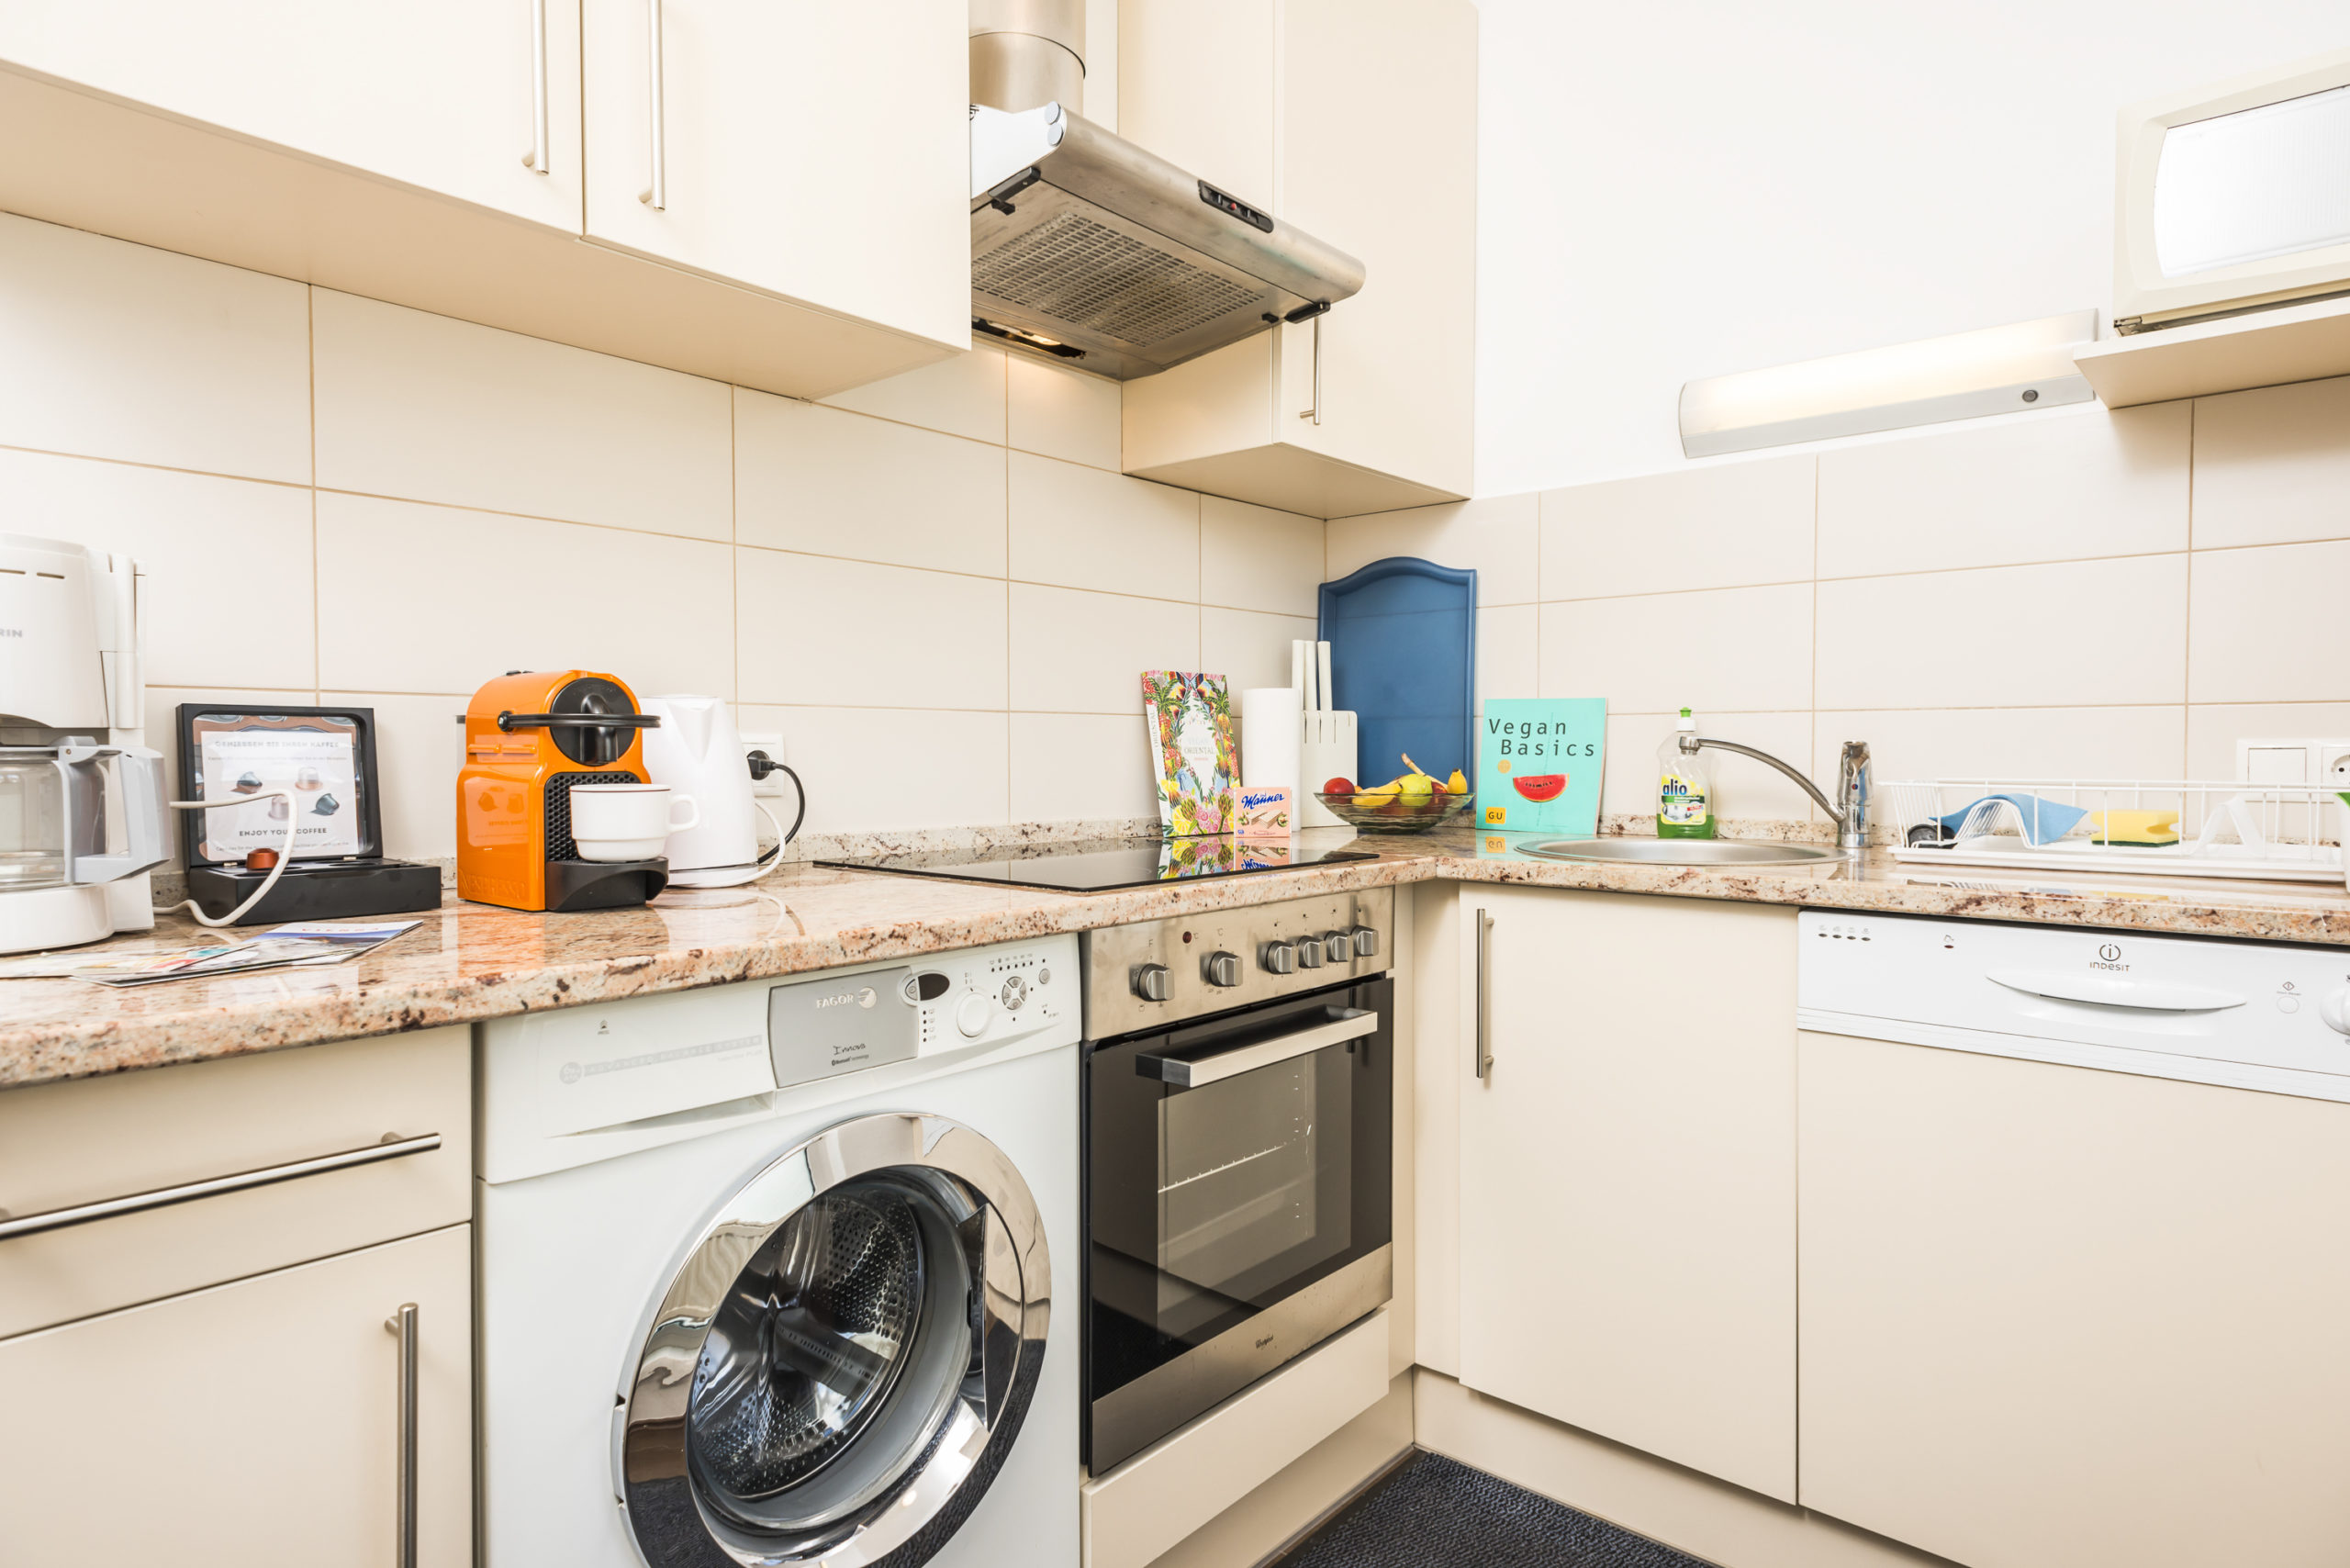 Apartment F21/18 kitchen and washing machine